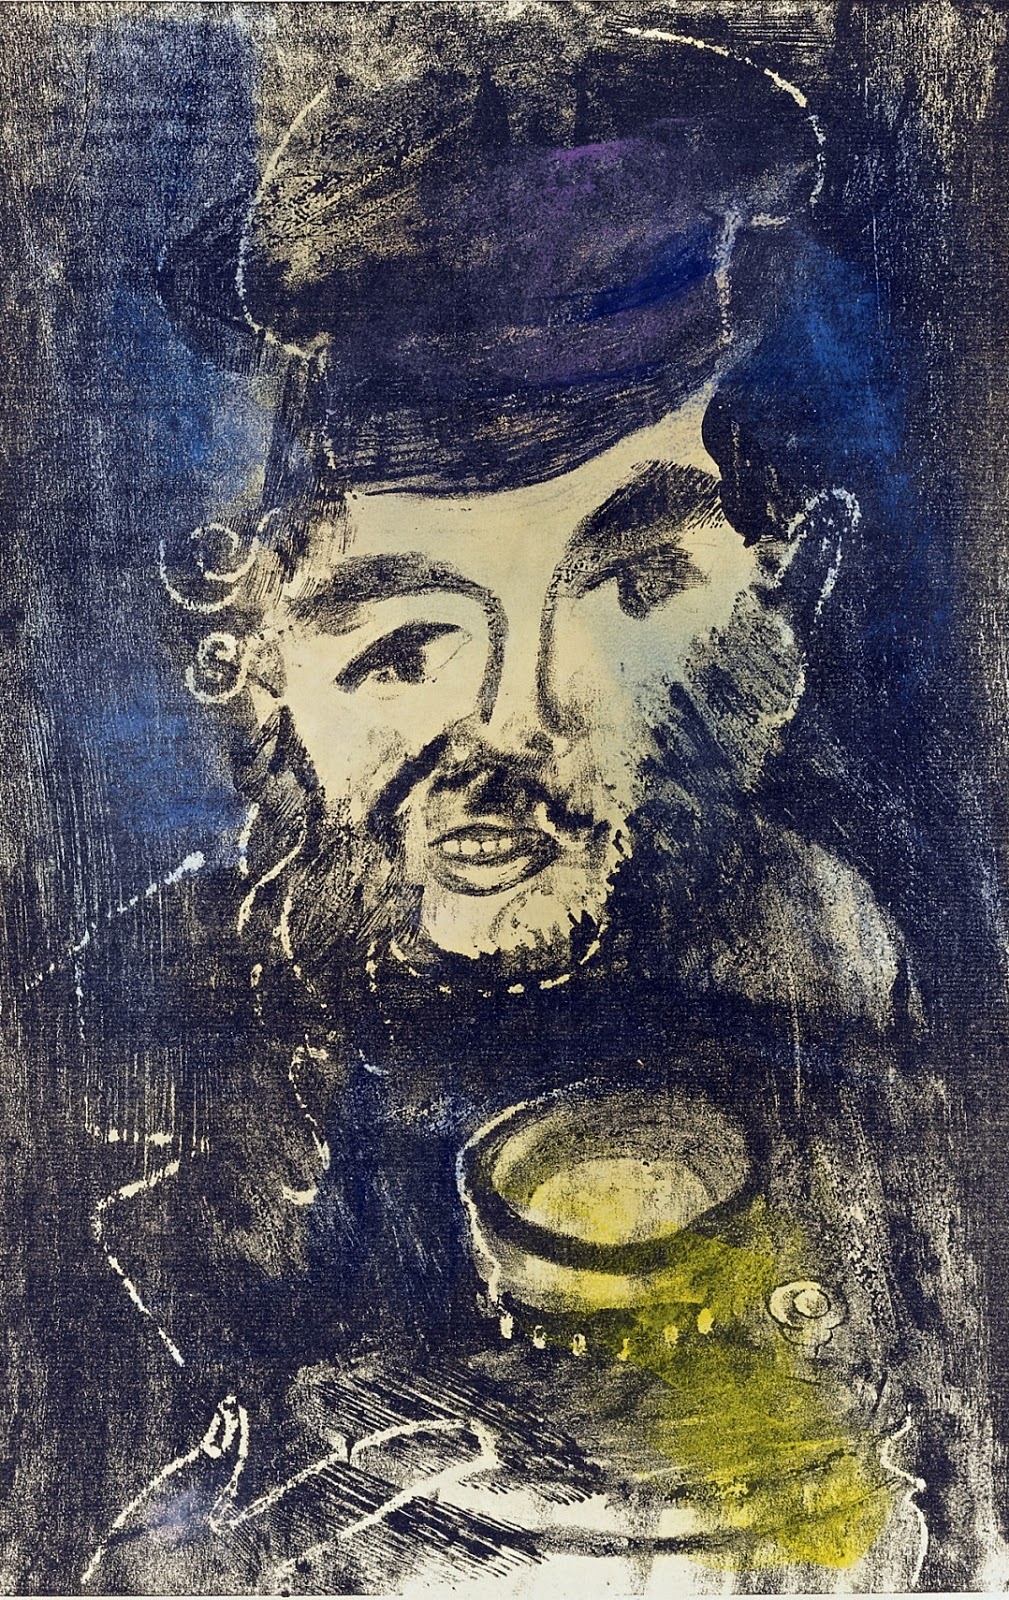 Marc+Chagall-1887-1985 (274).jpg